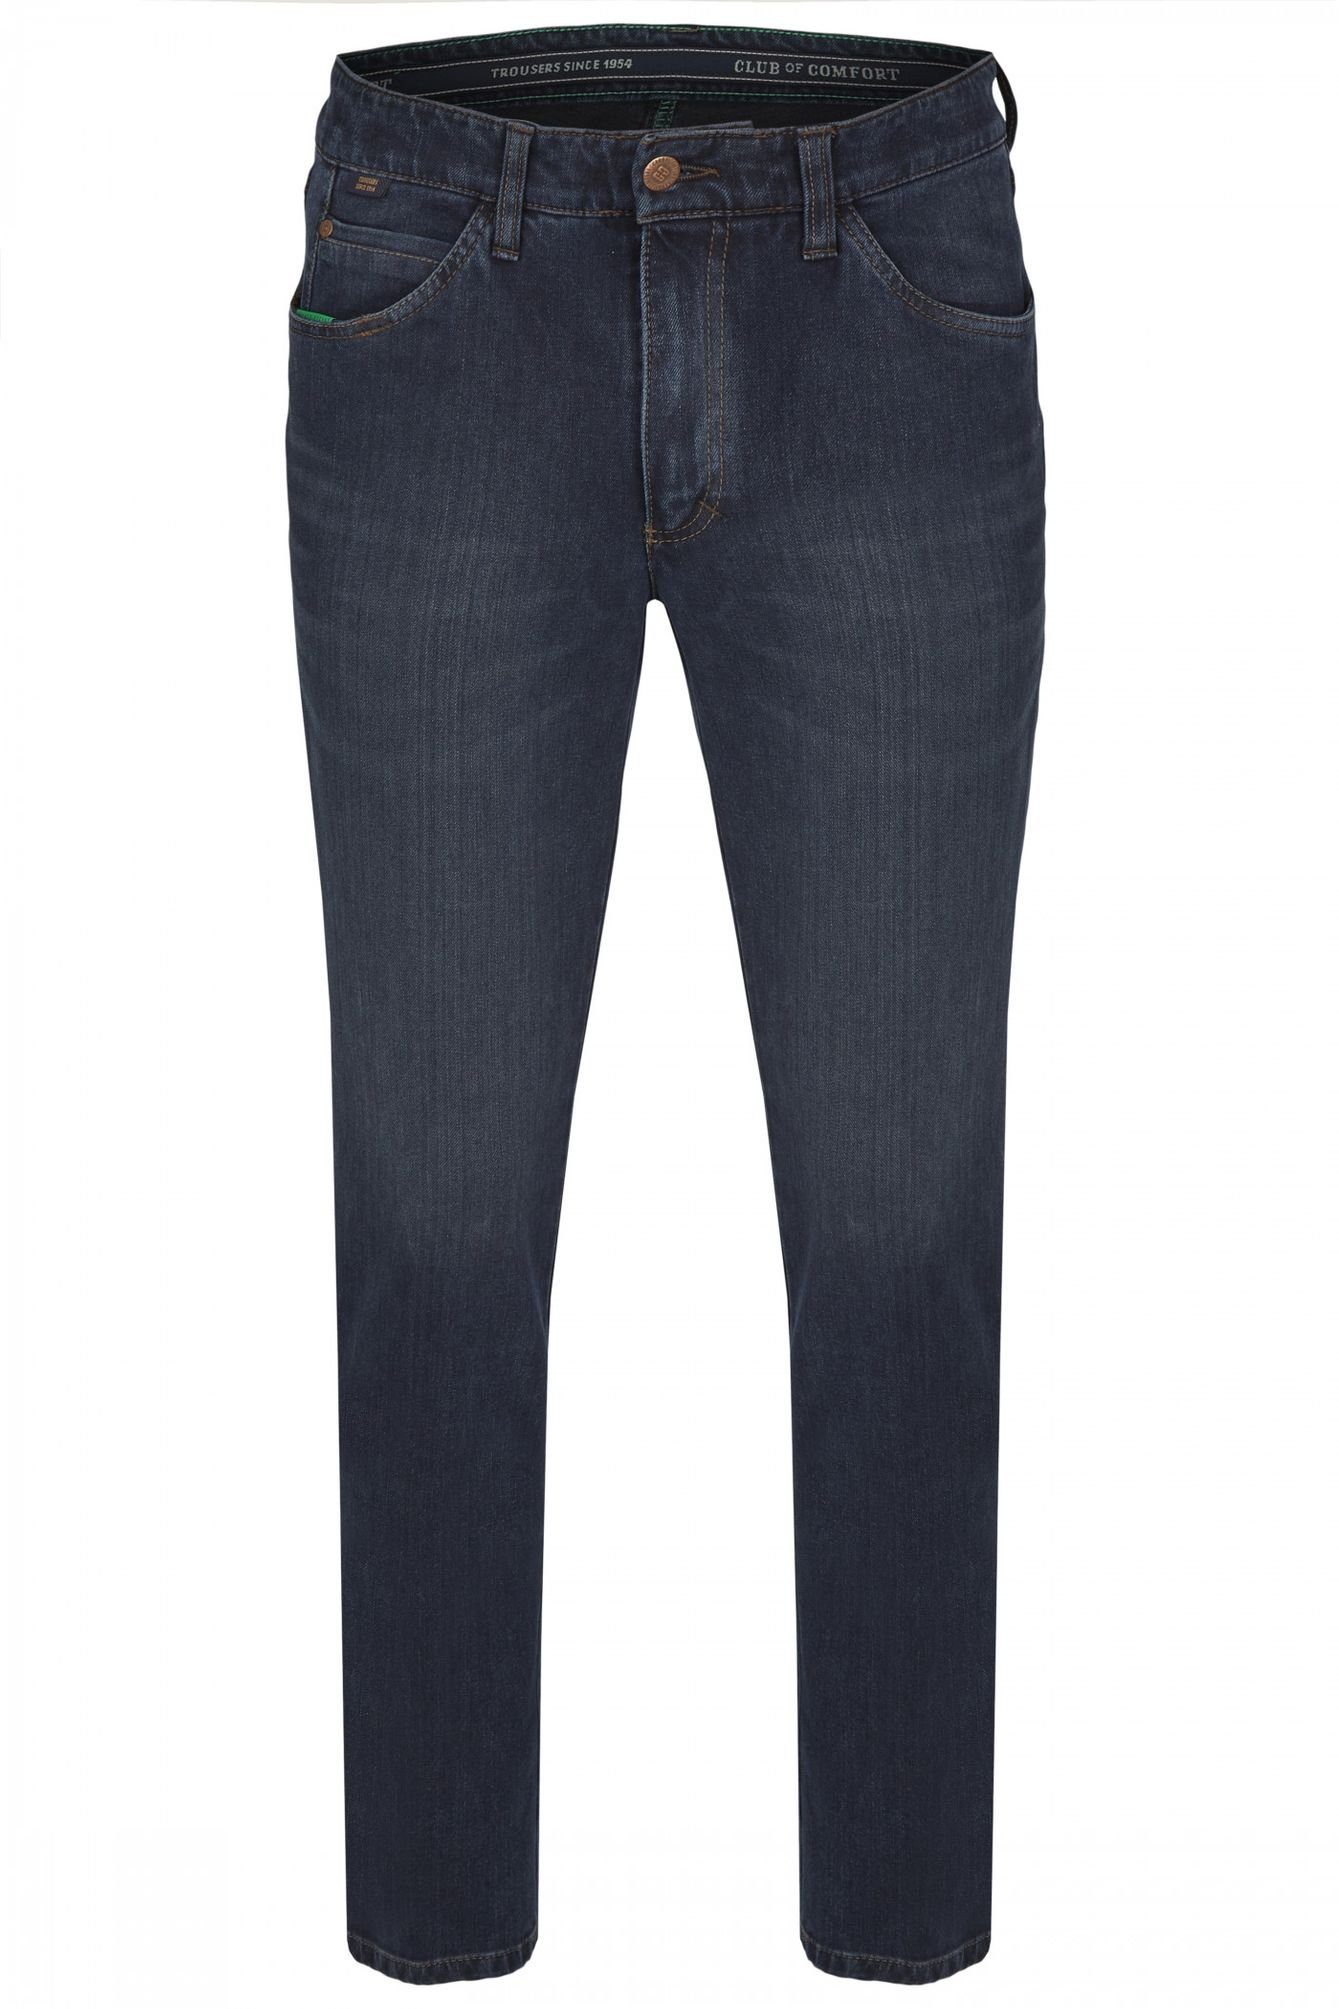 Comfort (941) Club dunkelblau Henry-X of 5-Pocket-Jeans